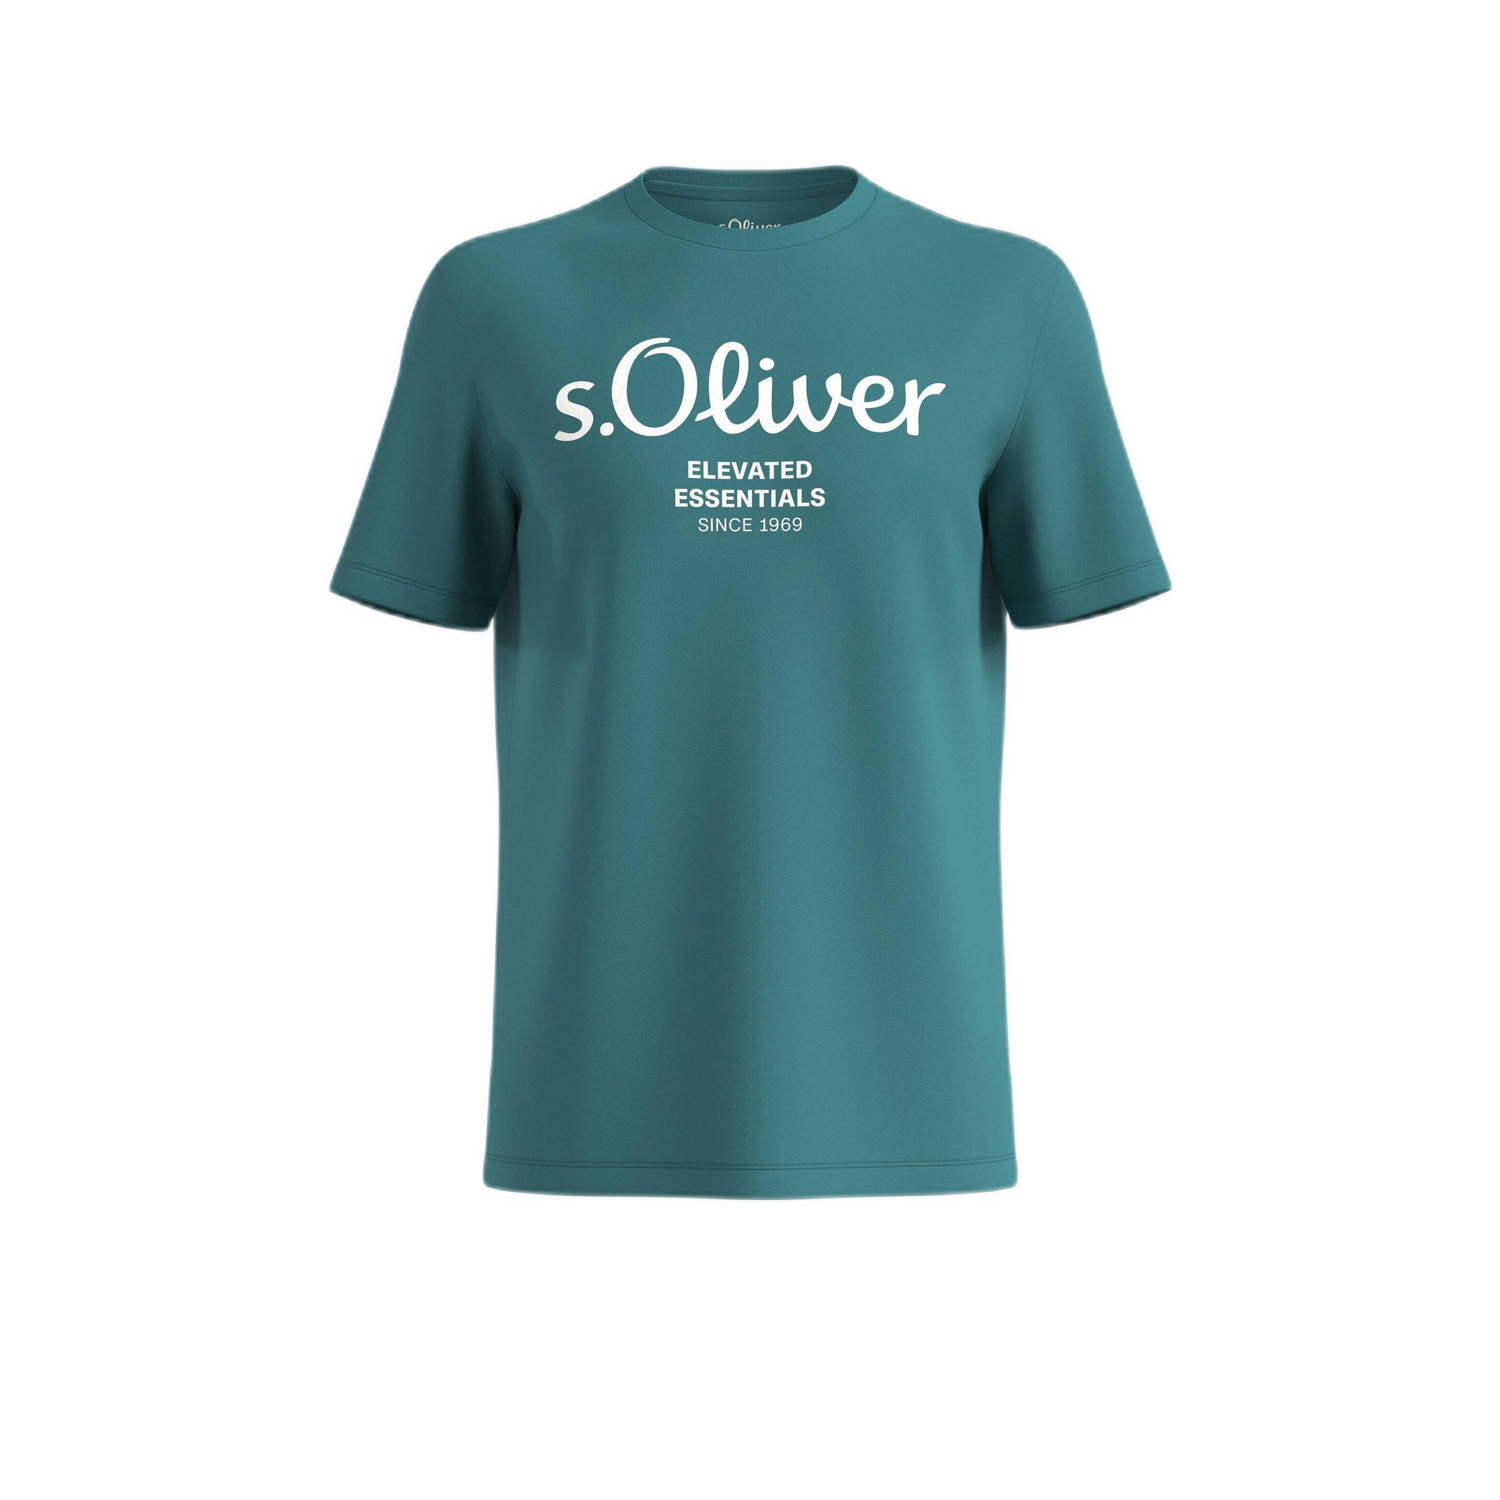 S.Oliver T-shirt met printopdruk petrol